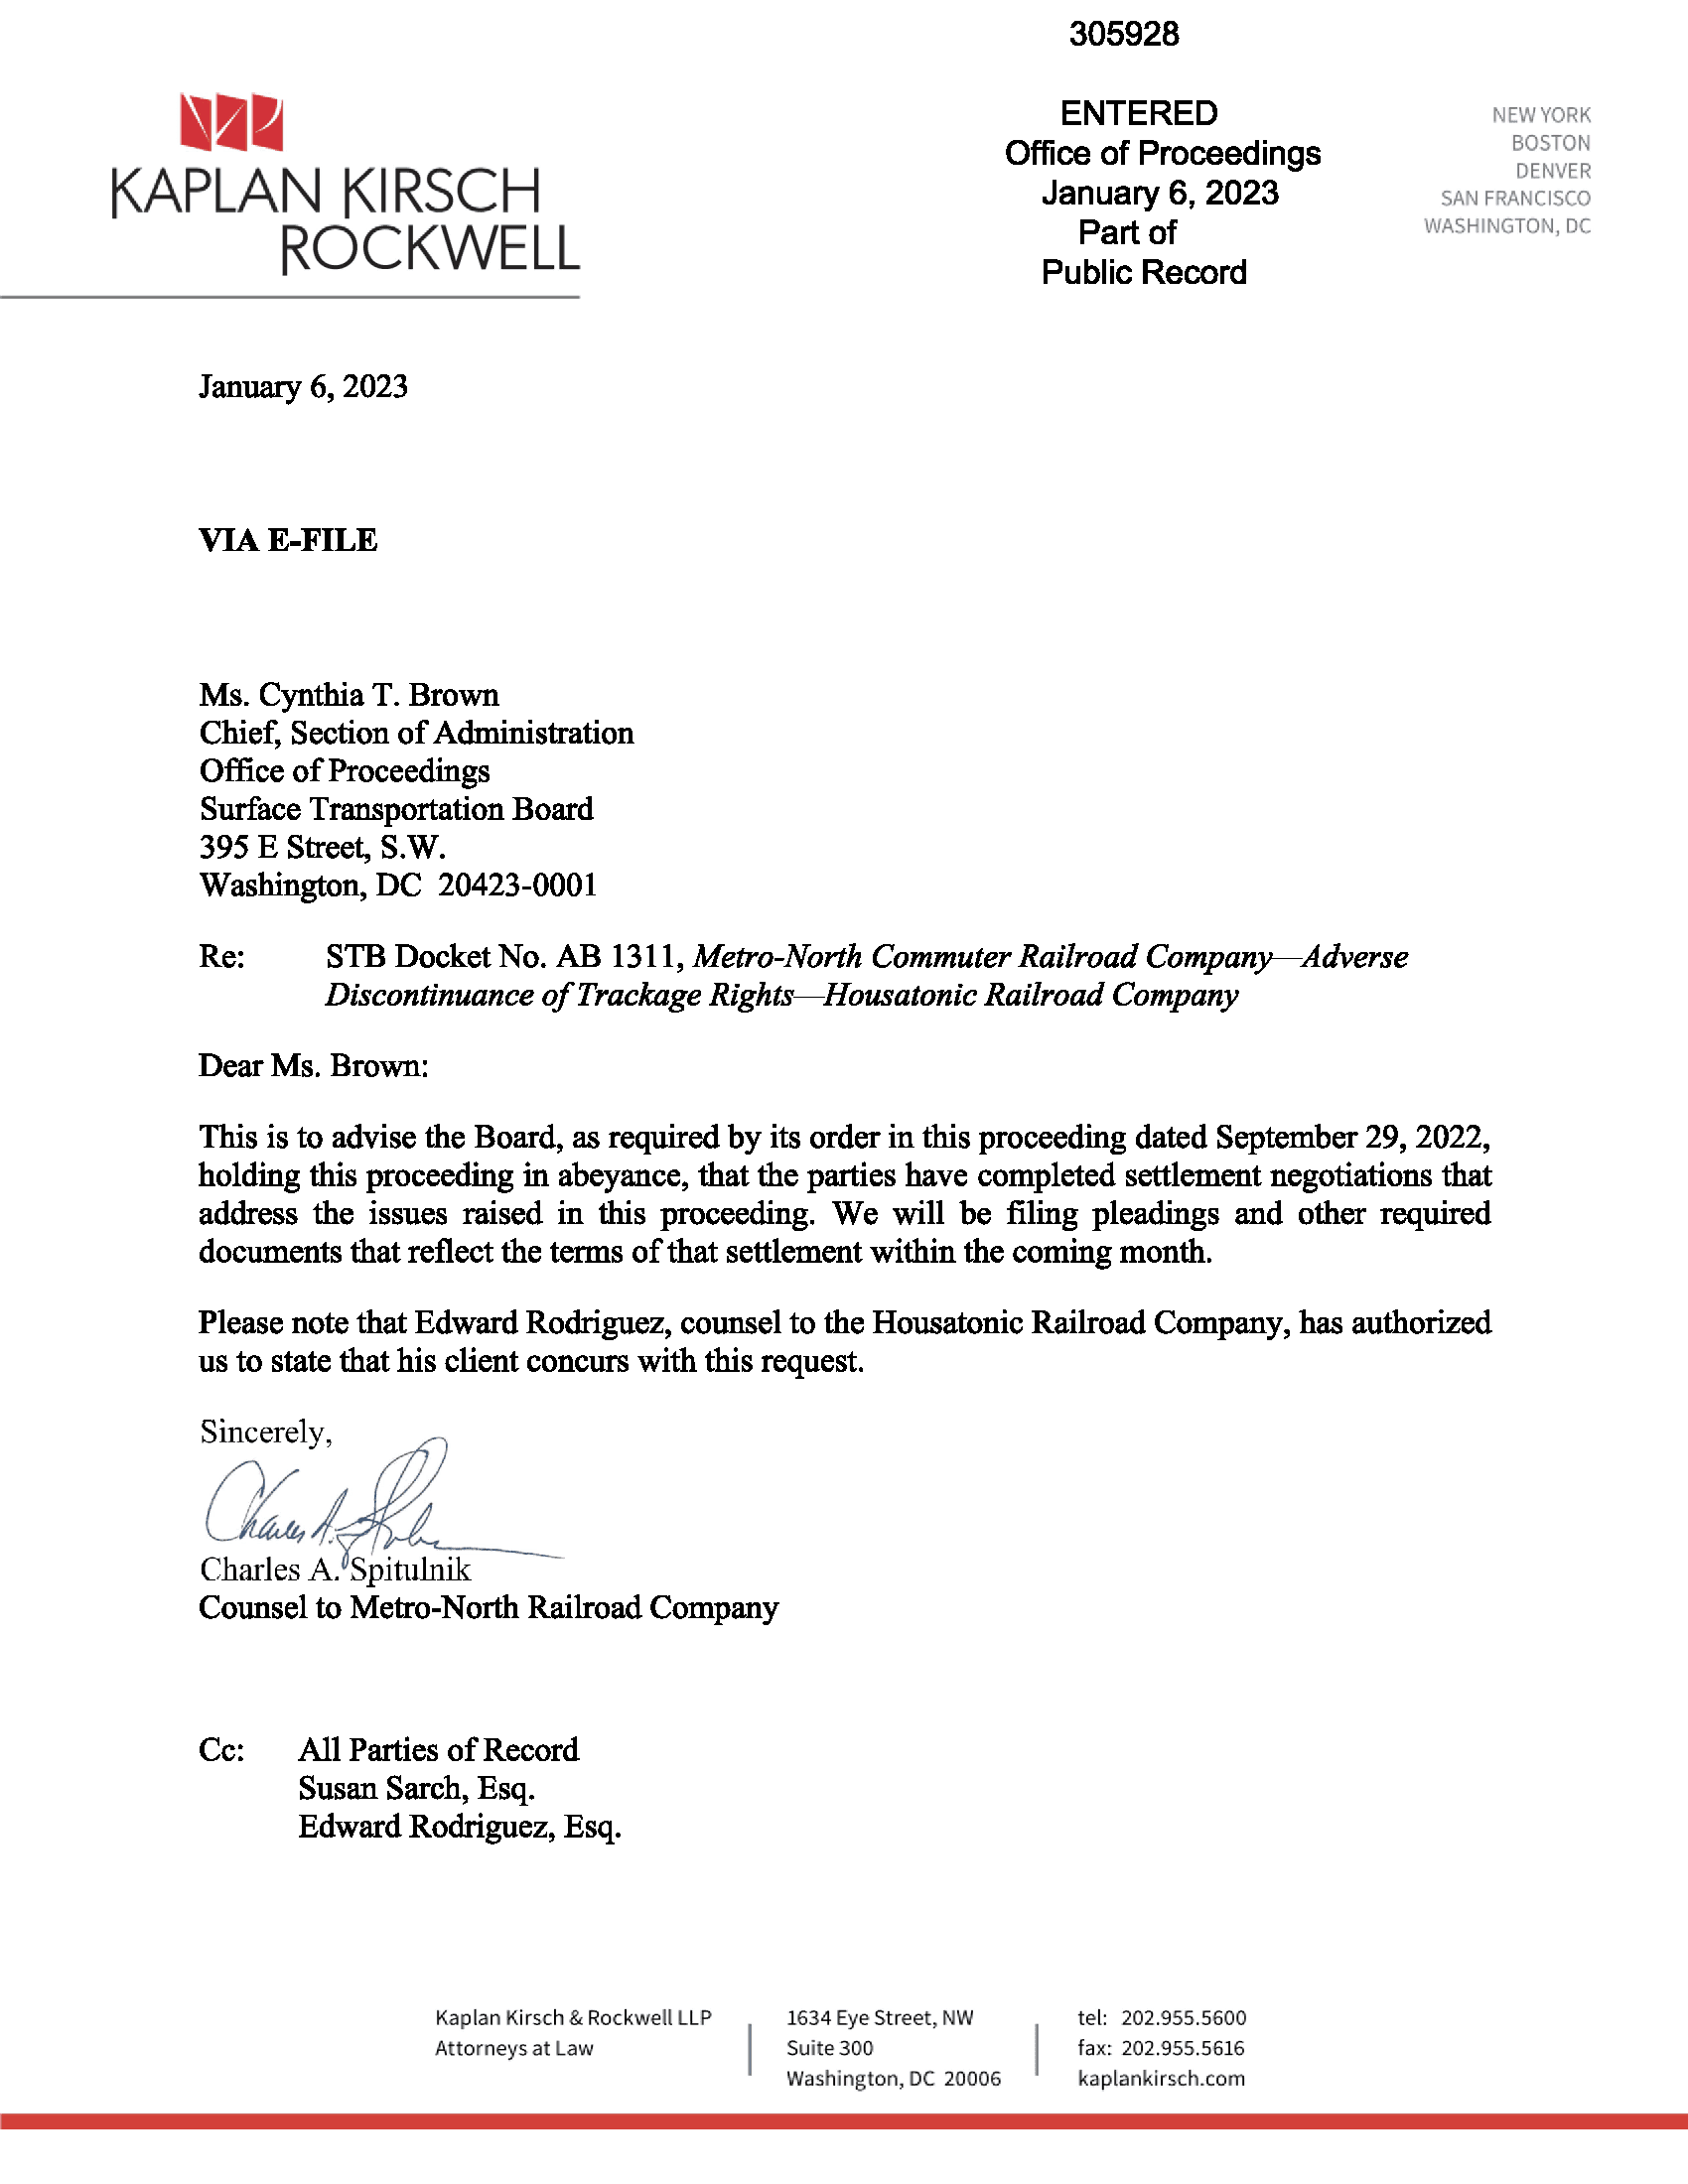 Metro North and Housatonic Settlement Negotiations Status Letter 1.6.2023